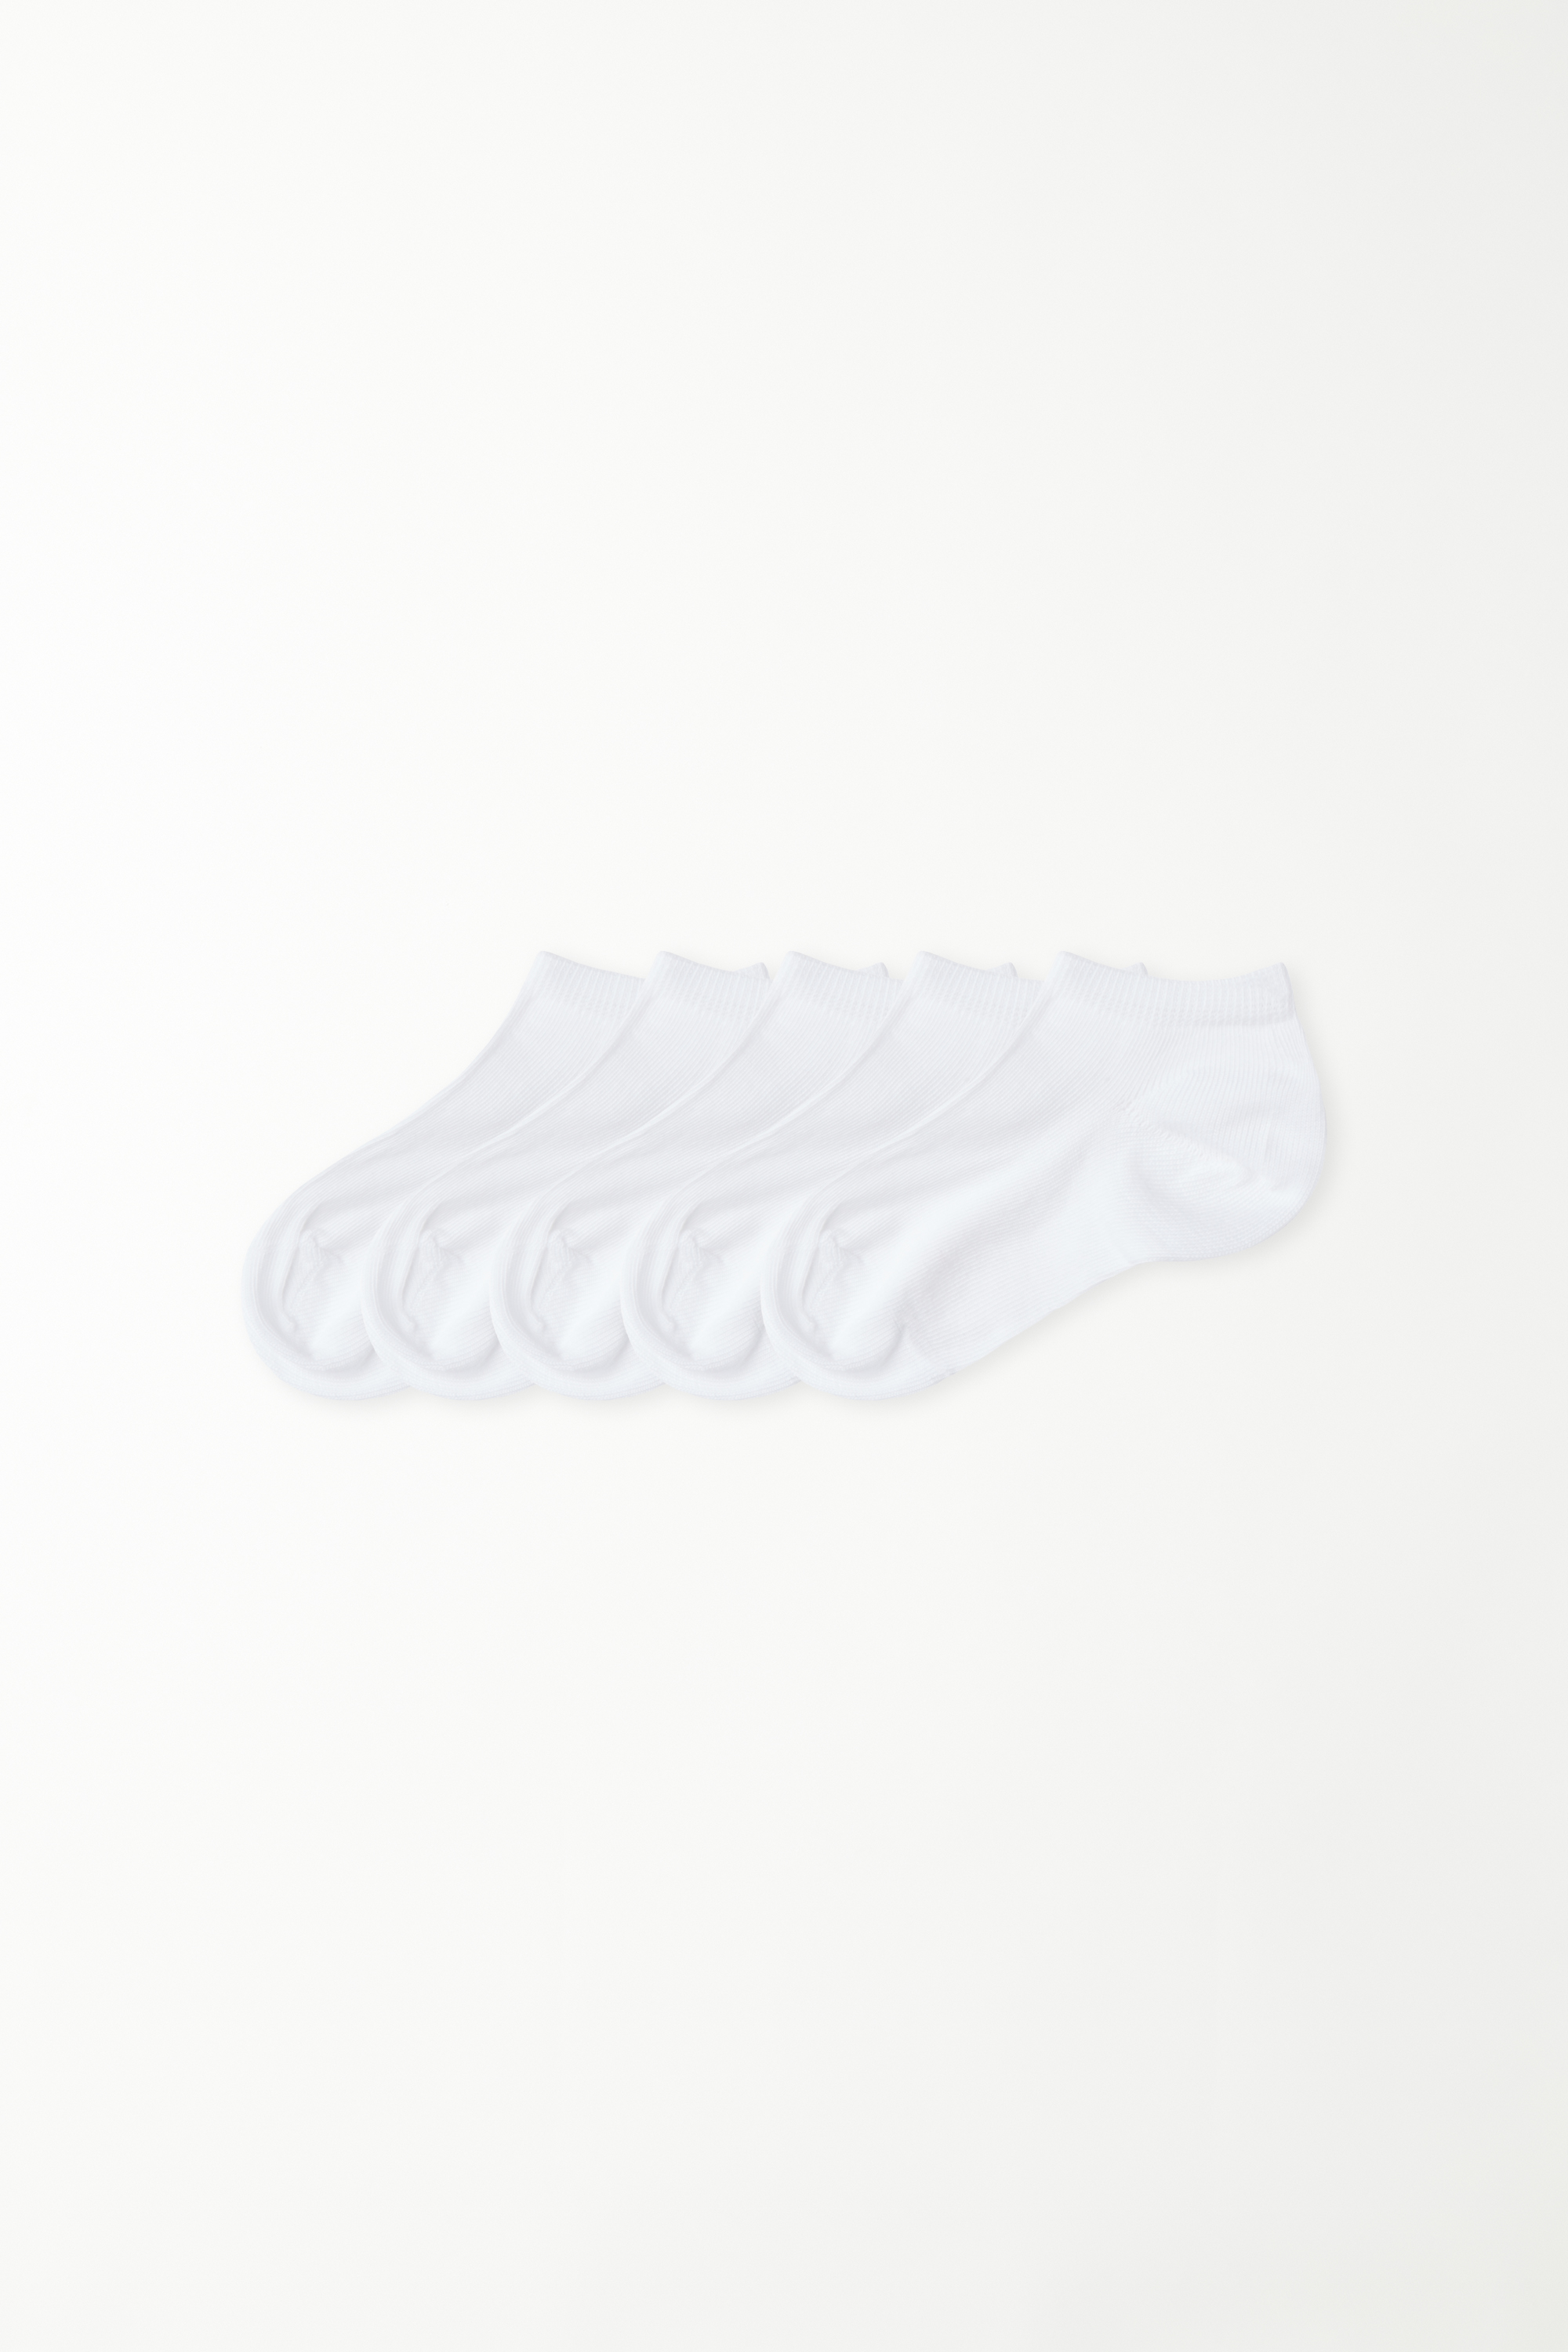 5 Pairs of Unisex Kids’ Cotton Trainer Socks